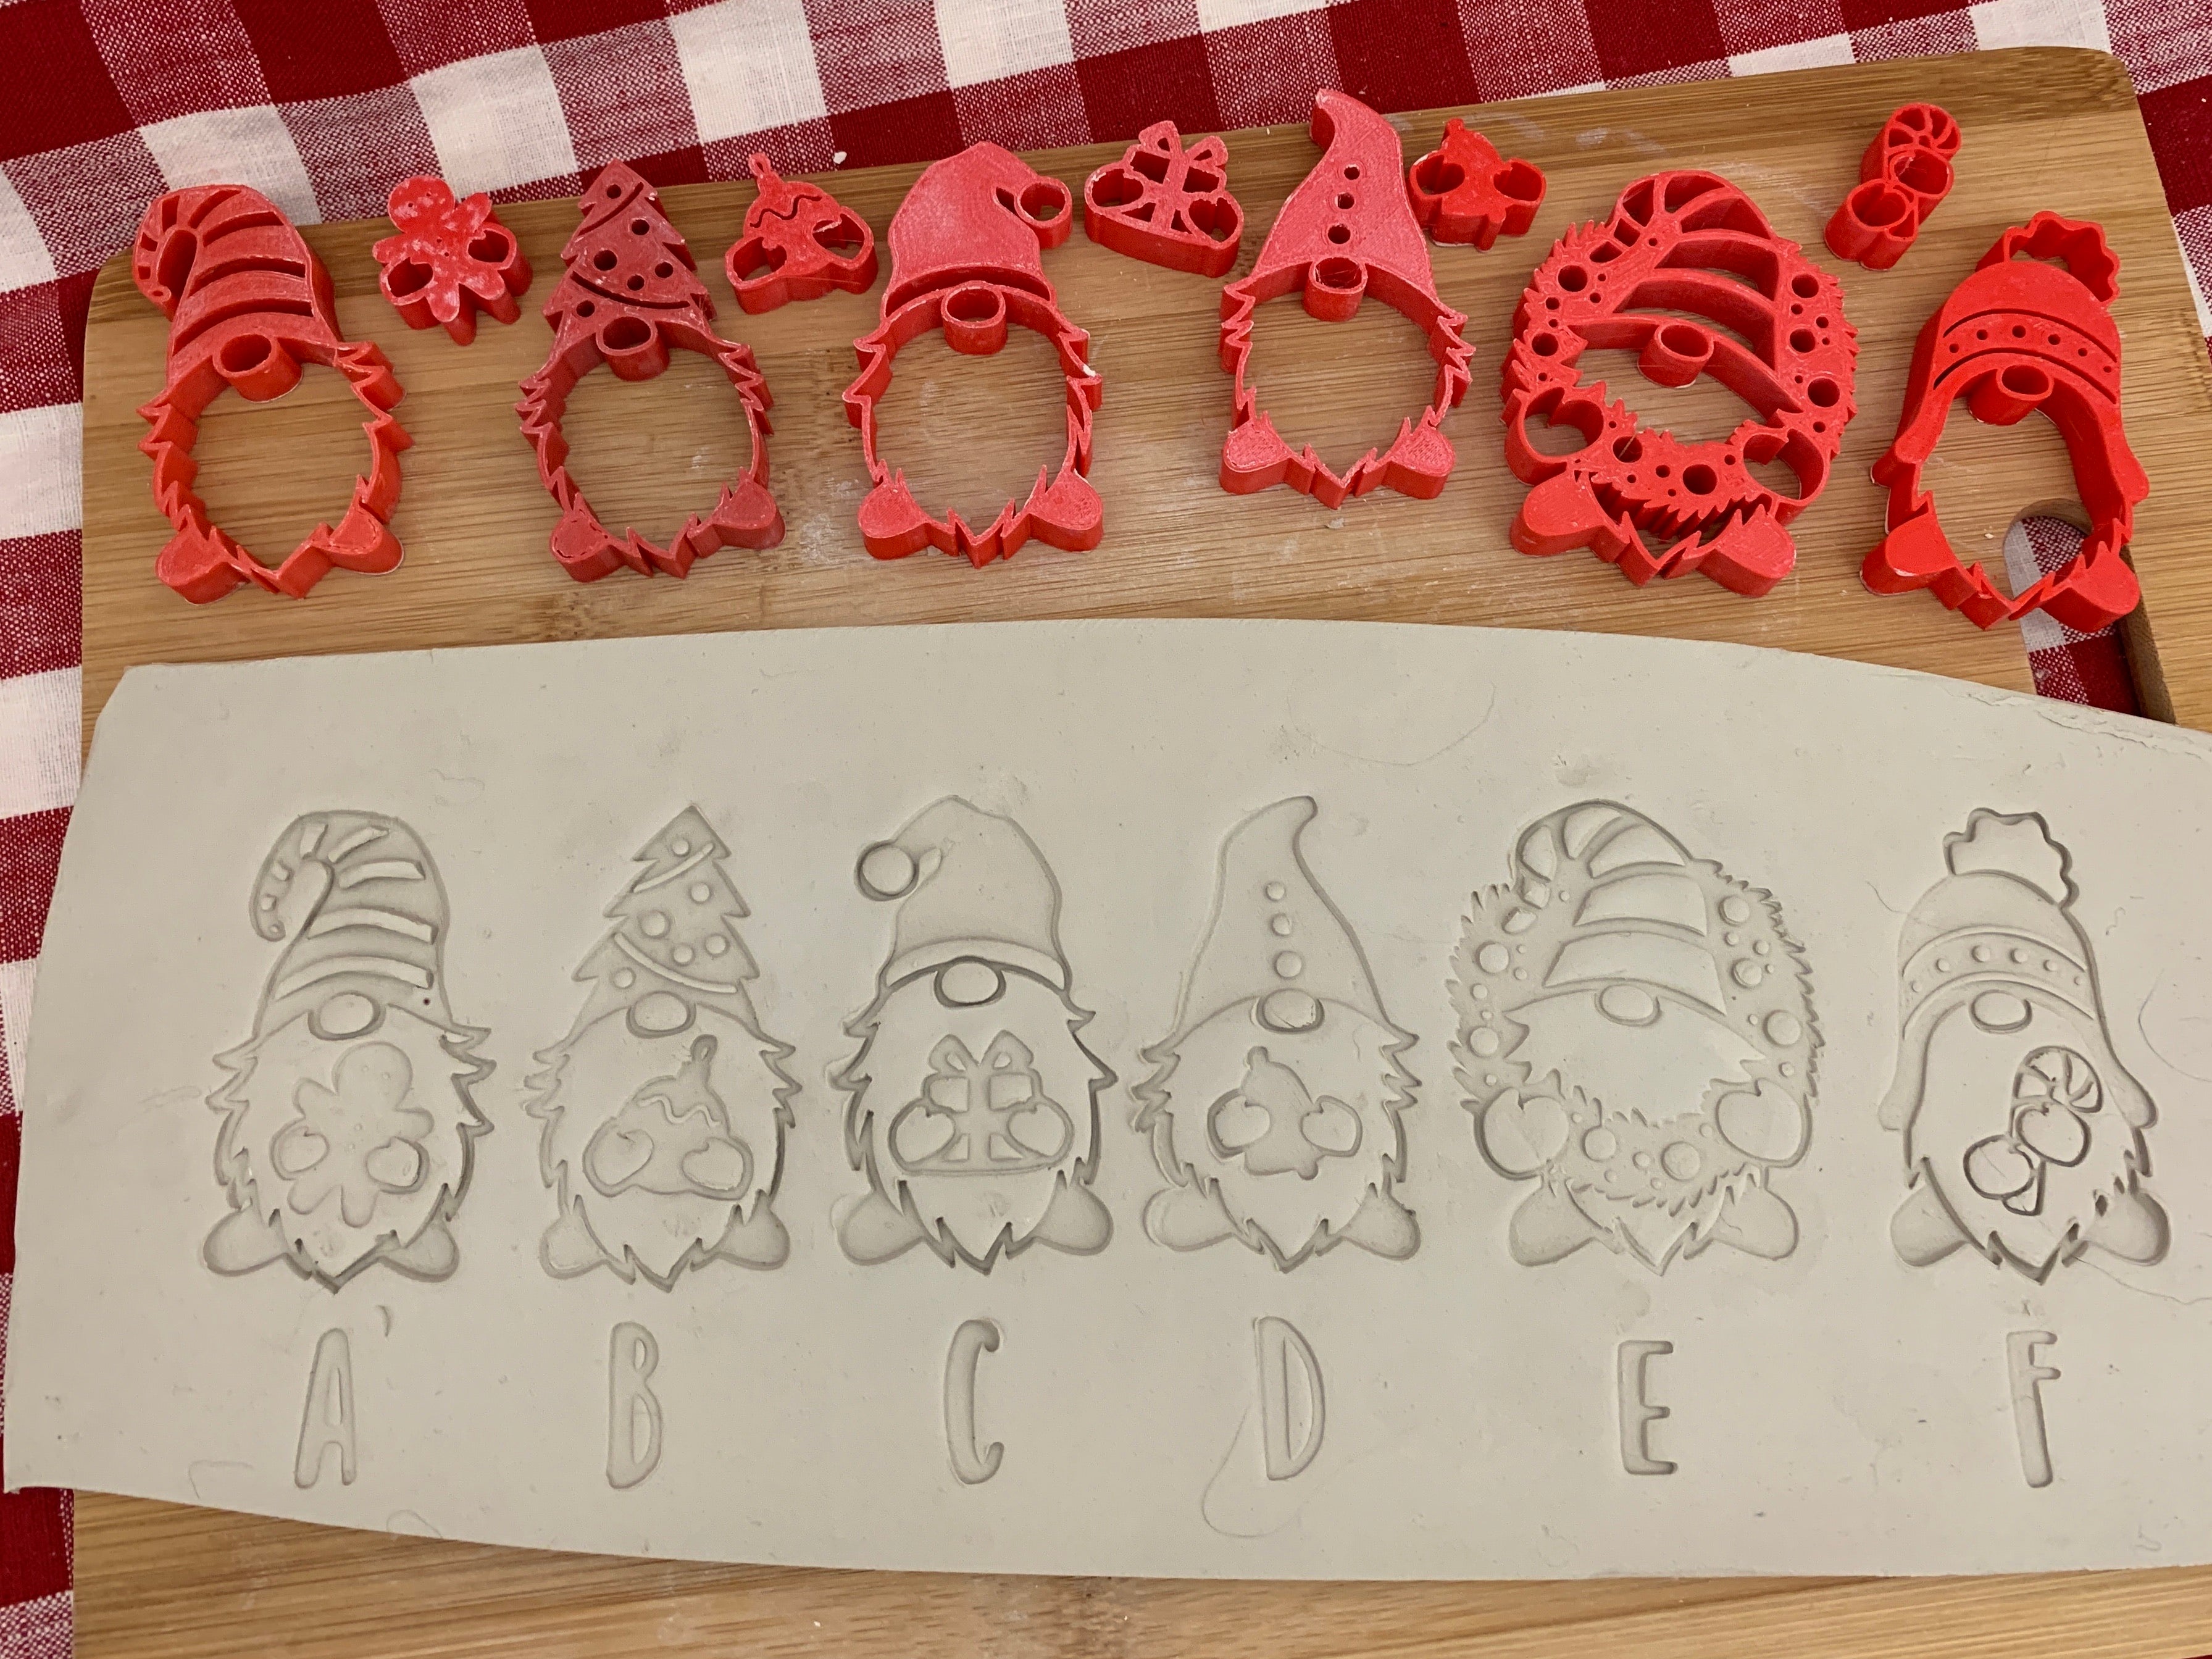 Baker Gnome SVG Gnome Bakery Digital Stamps Kitchen Gnomes 